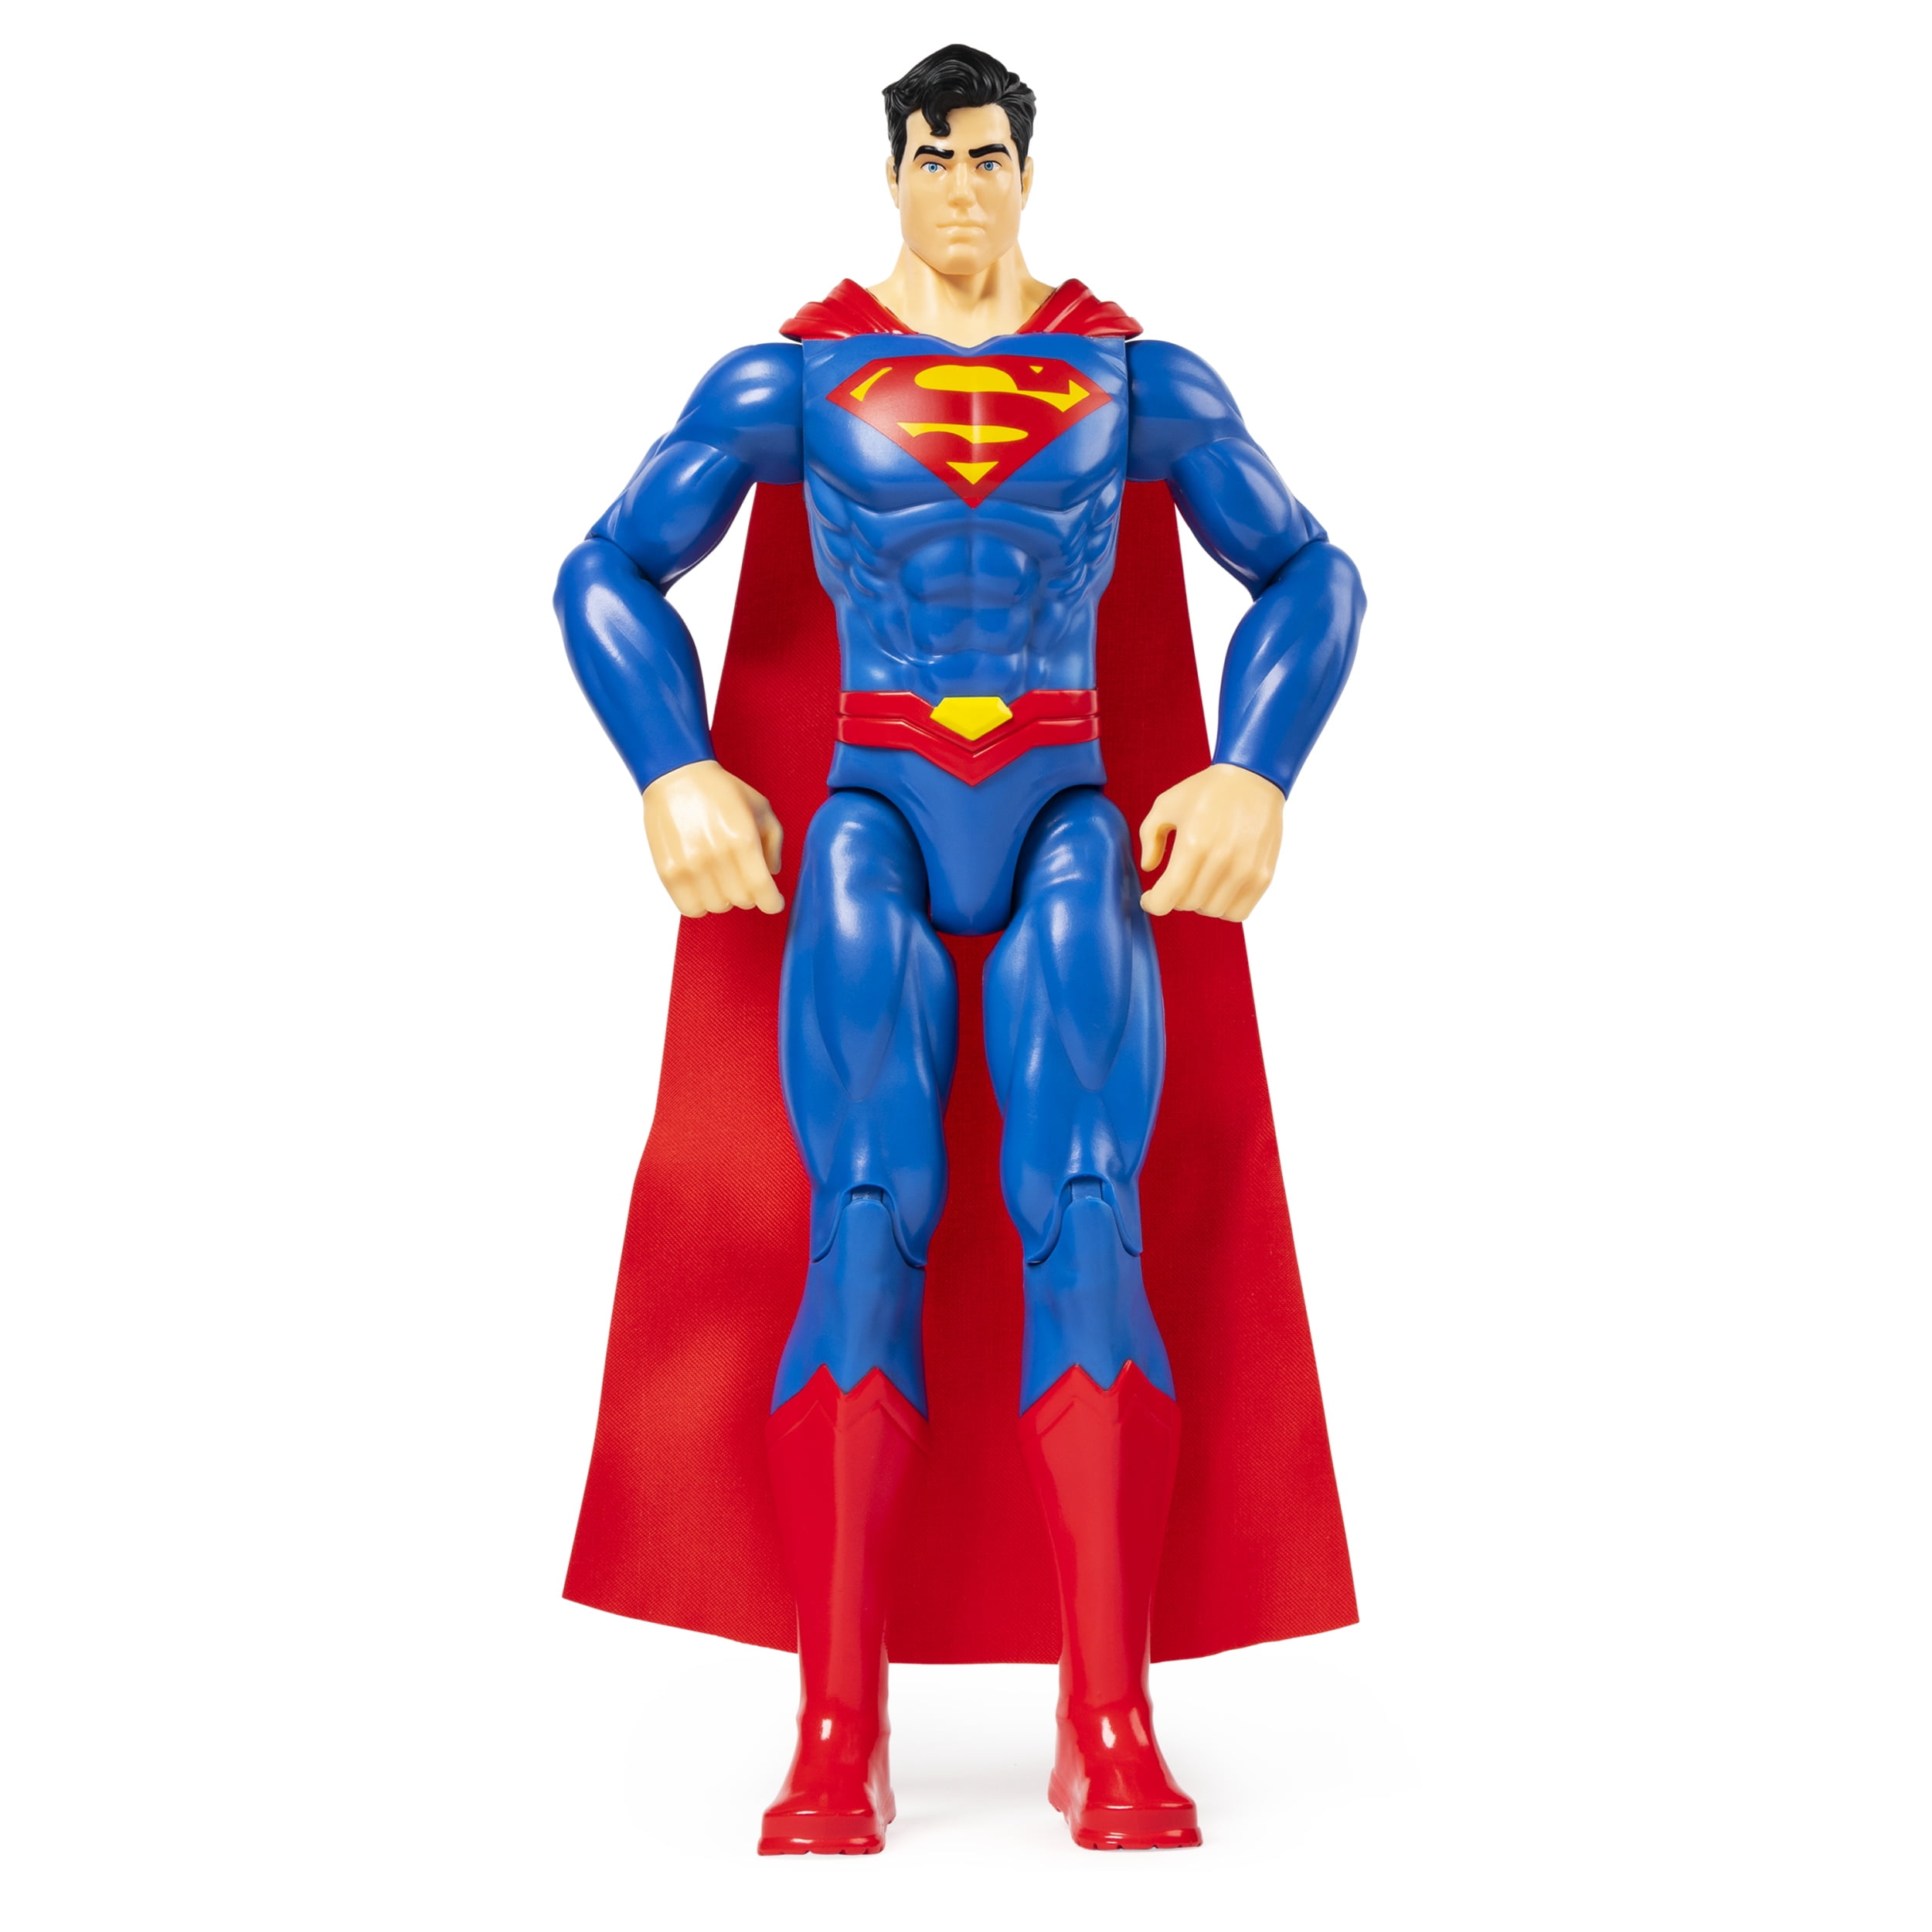 12 Superhero & Villains Marvel DC Comics Mini Figures Batman Superman Spiderman 